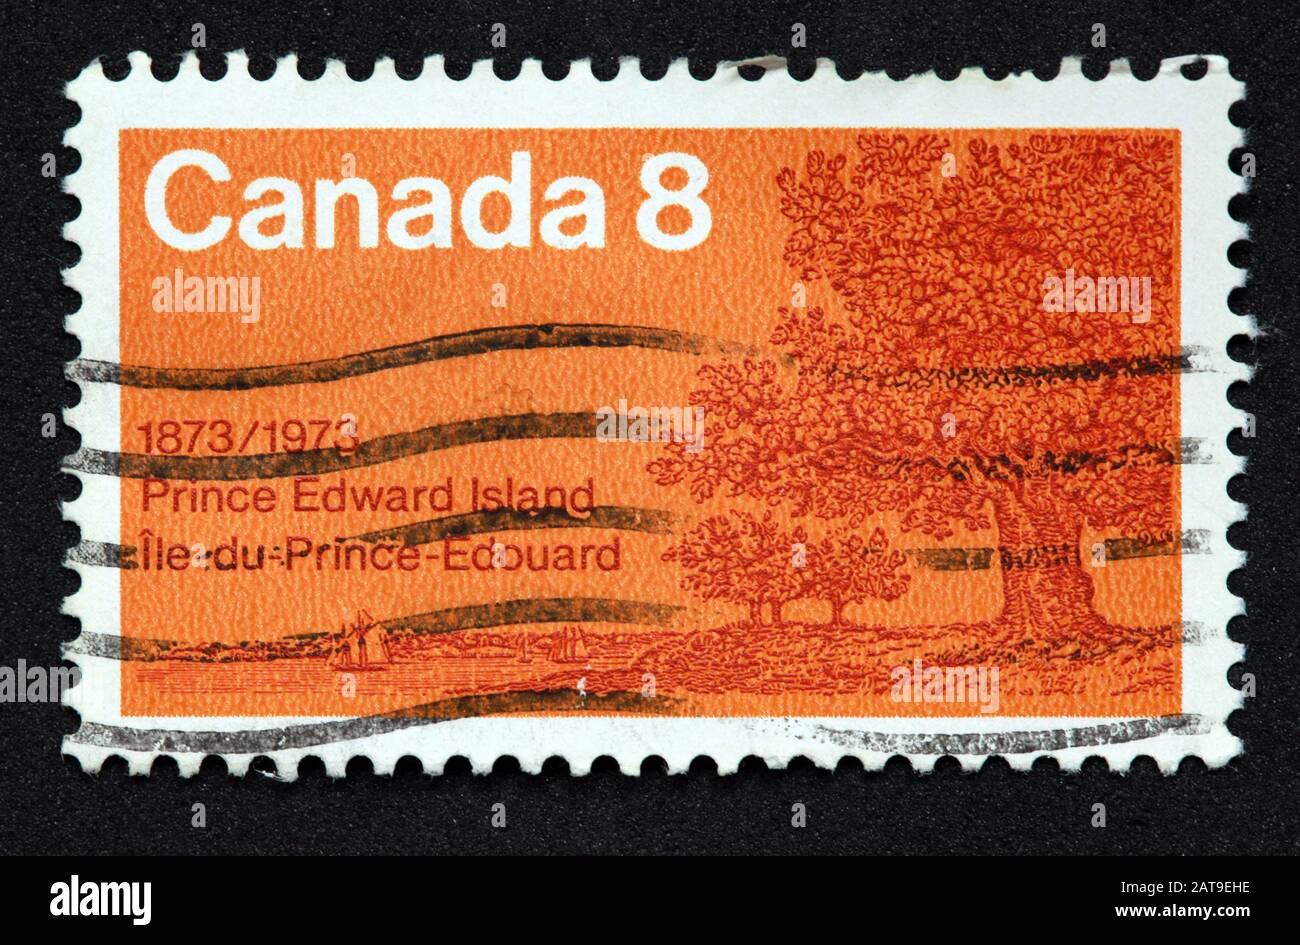 Canadian Stamp, Canada Stamp, Canada Post,used stamp, Canada 8c,8cent, , 1873-1973, Prince Edward Island, ile du prince-edouard,Orange,Orange Stamp Stock Photo